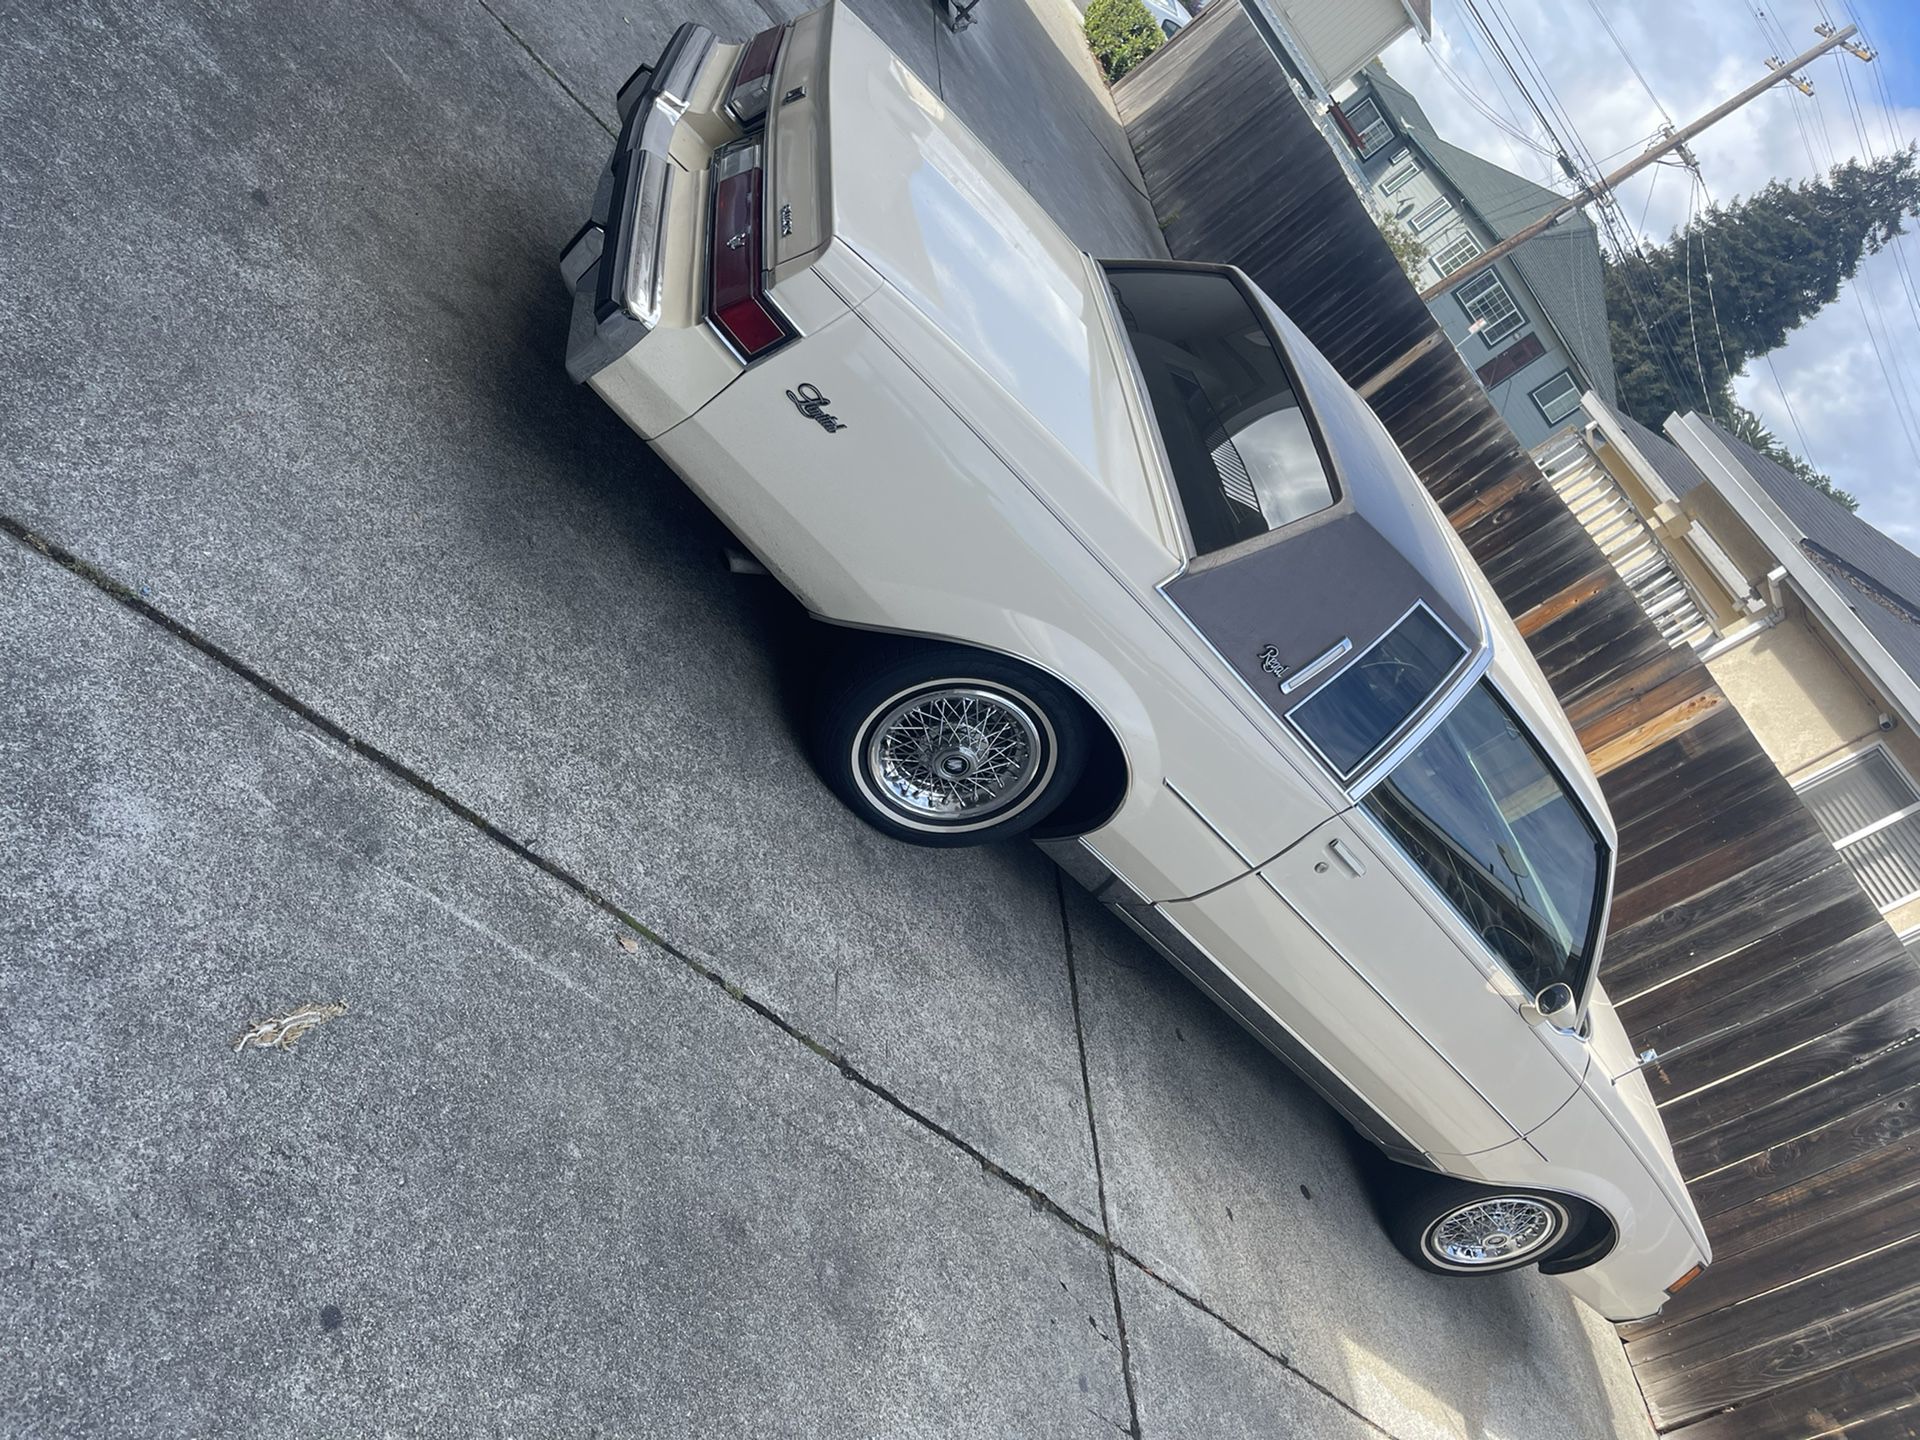 1983 Buick Regal